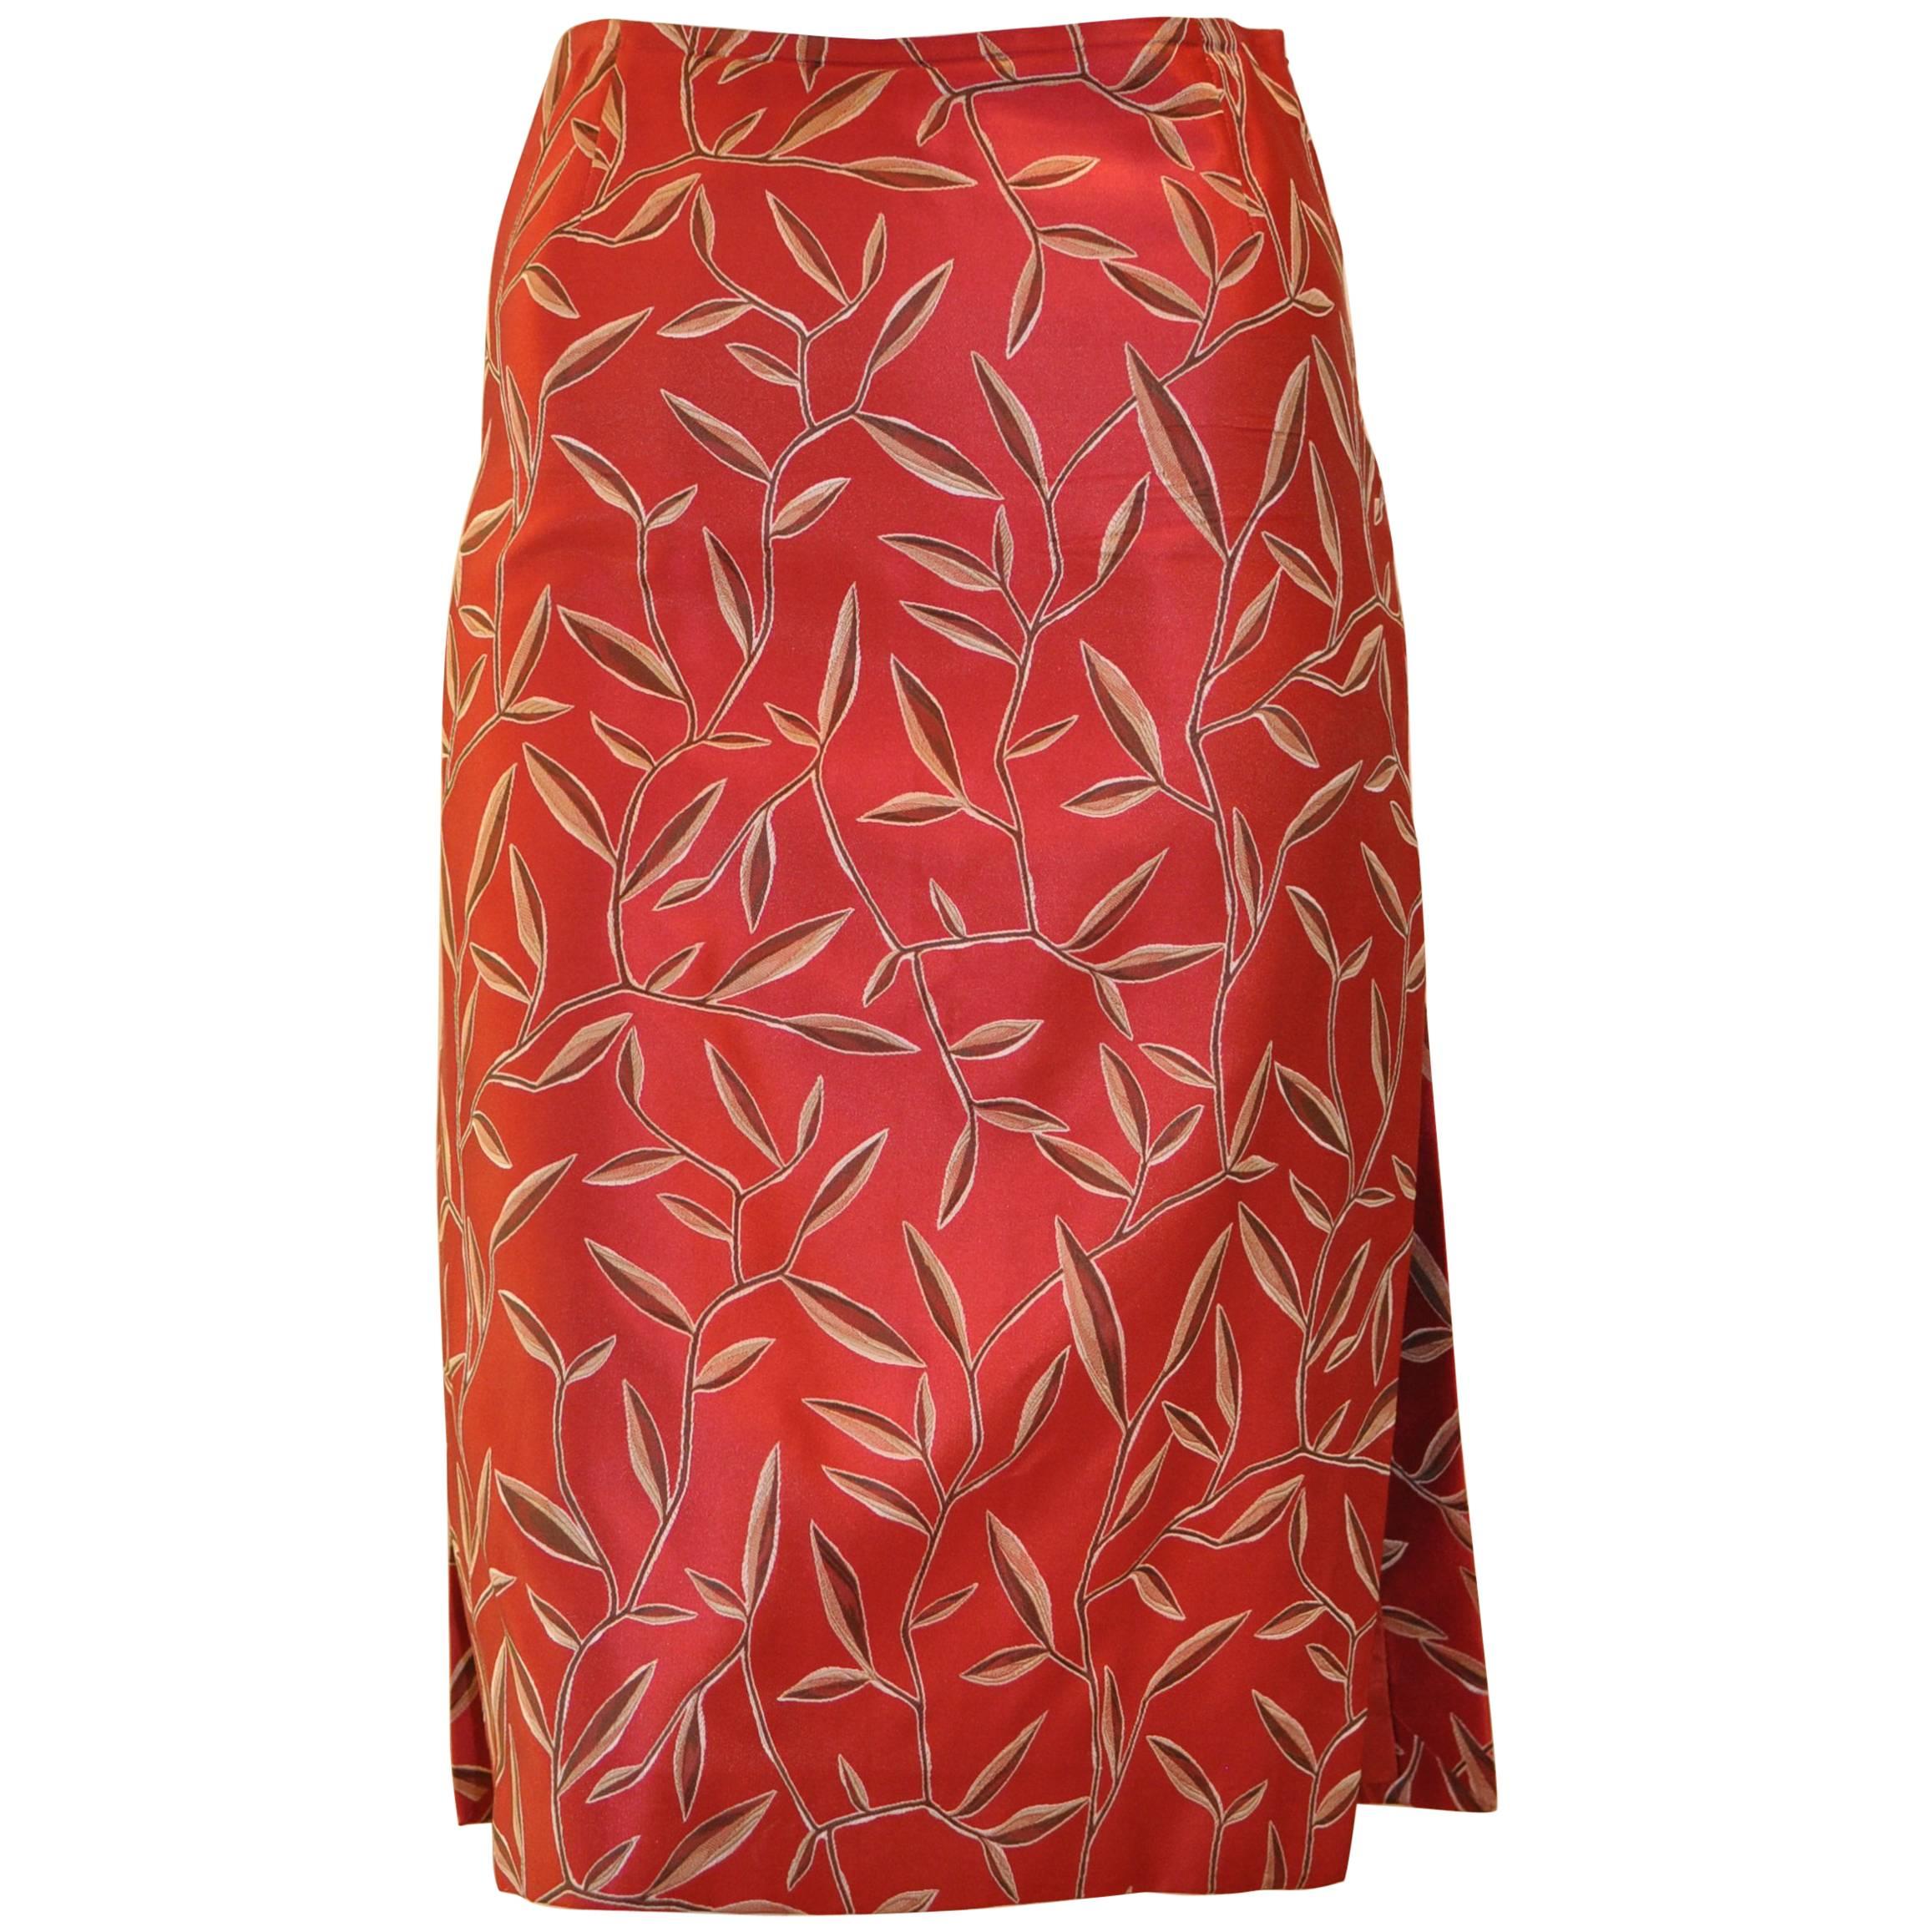 Prada Red Silk Skirt With a Leaf Pattern 38 (ITL)